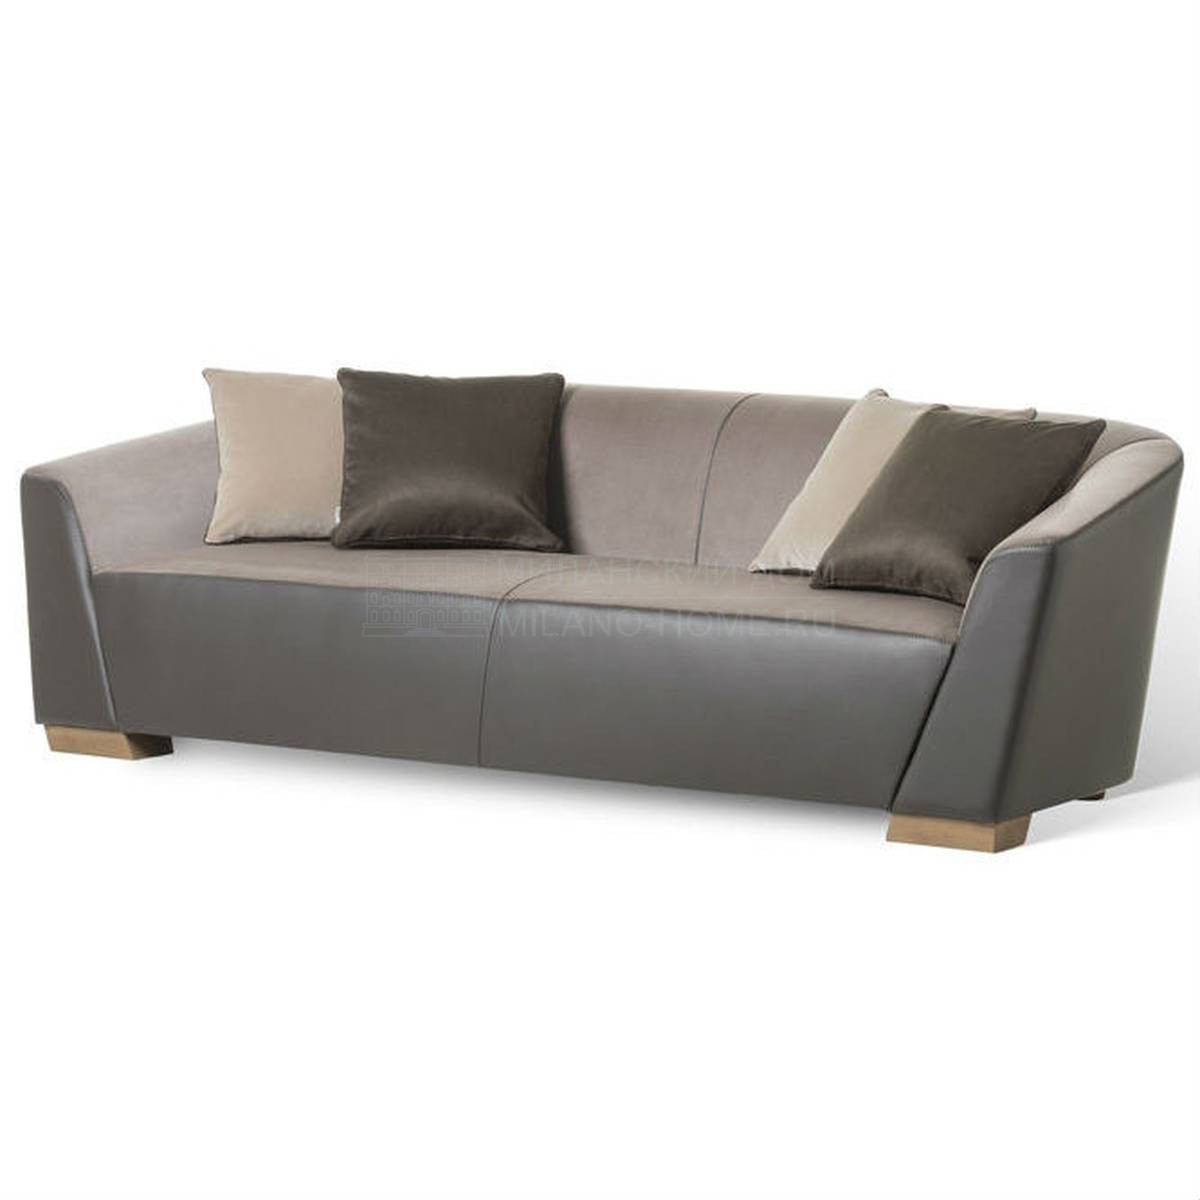 Прямой диван Nest sofa из Италии фабрики MEDEA (Life style)